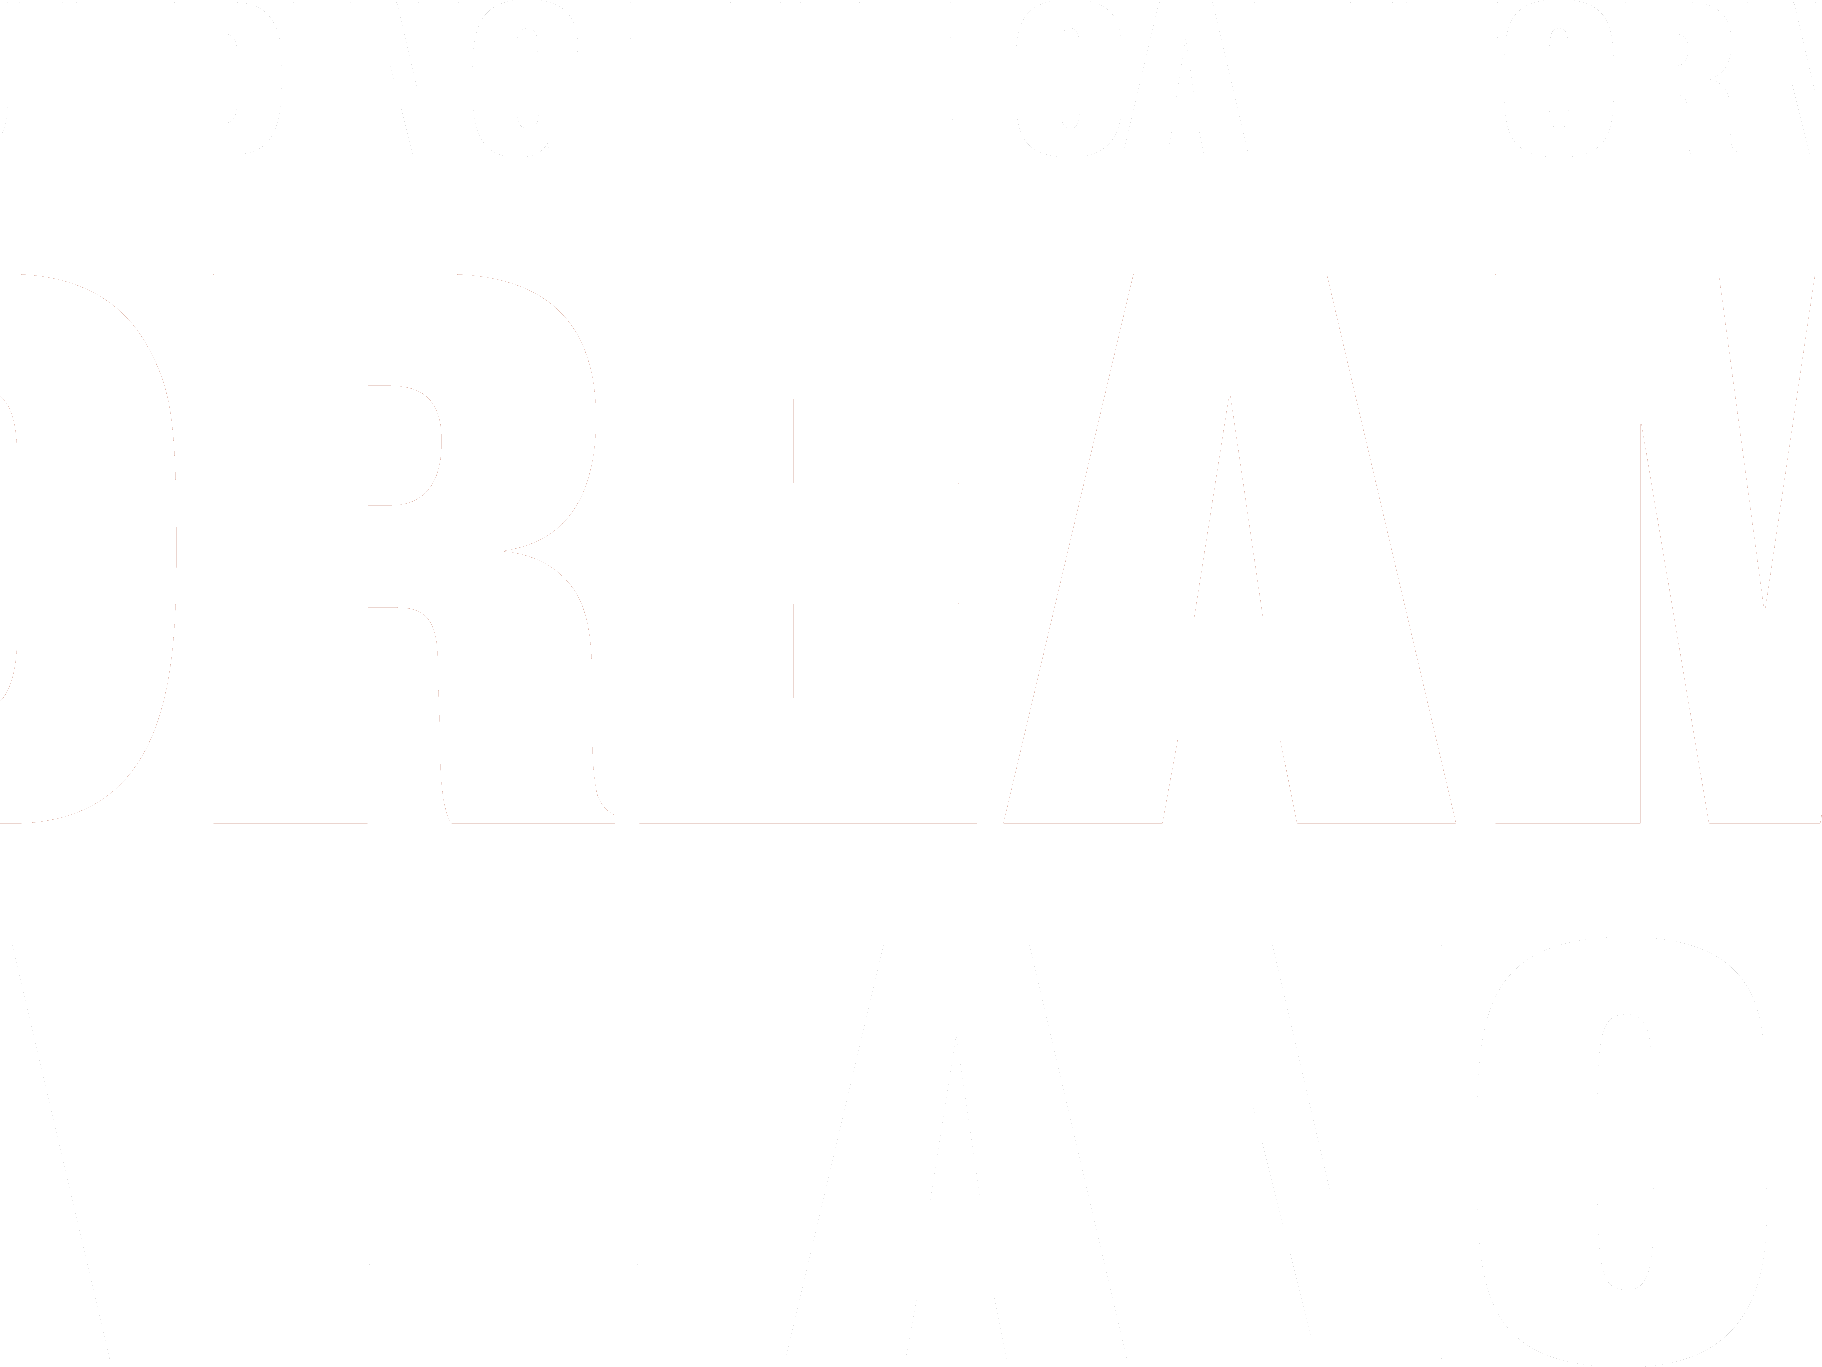 Building the California Dream Alliance